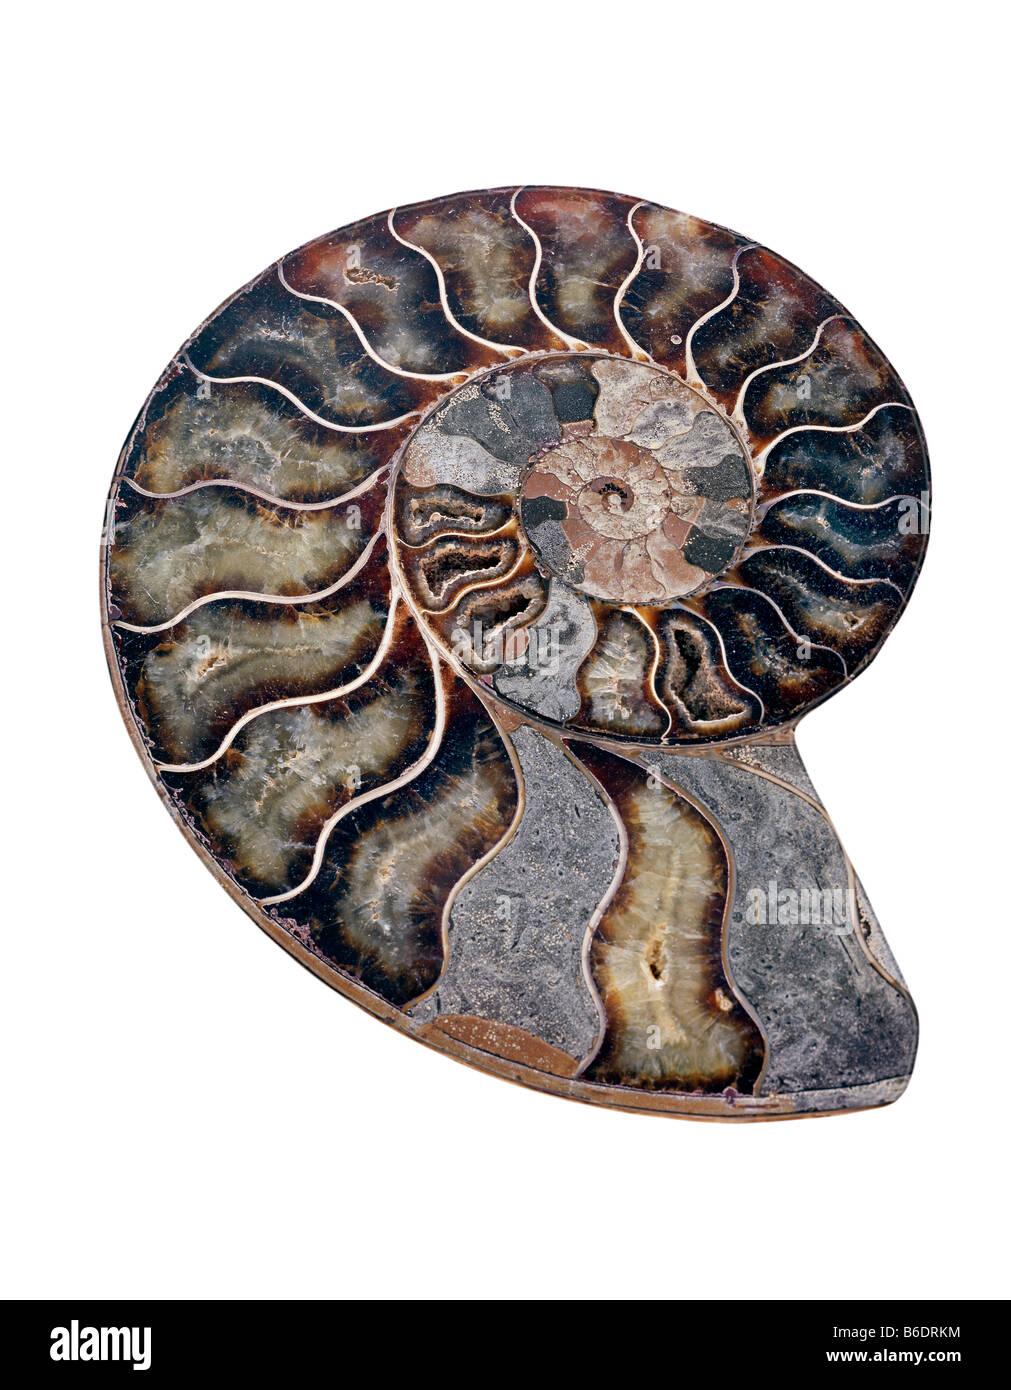 Amonita. Amonita seccionadas pulido fósil. Ammonites están extintas de invertebrados marinos. Foto de stock